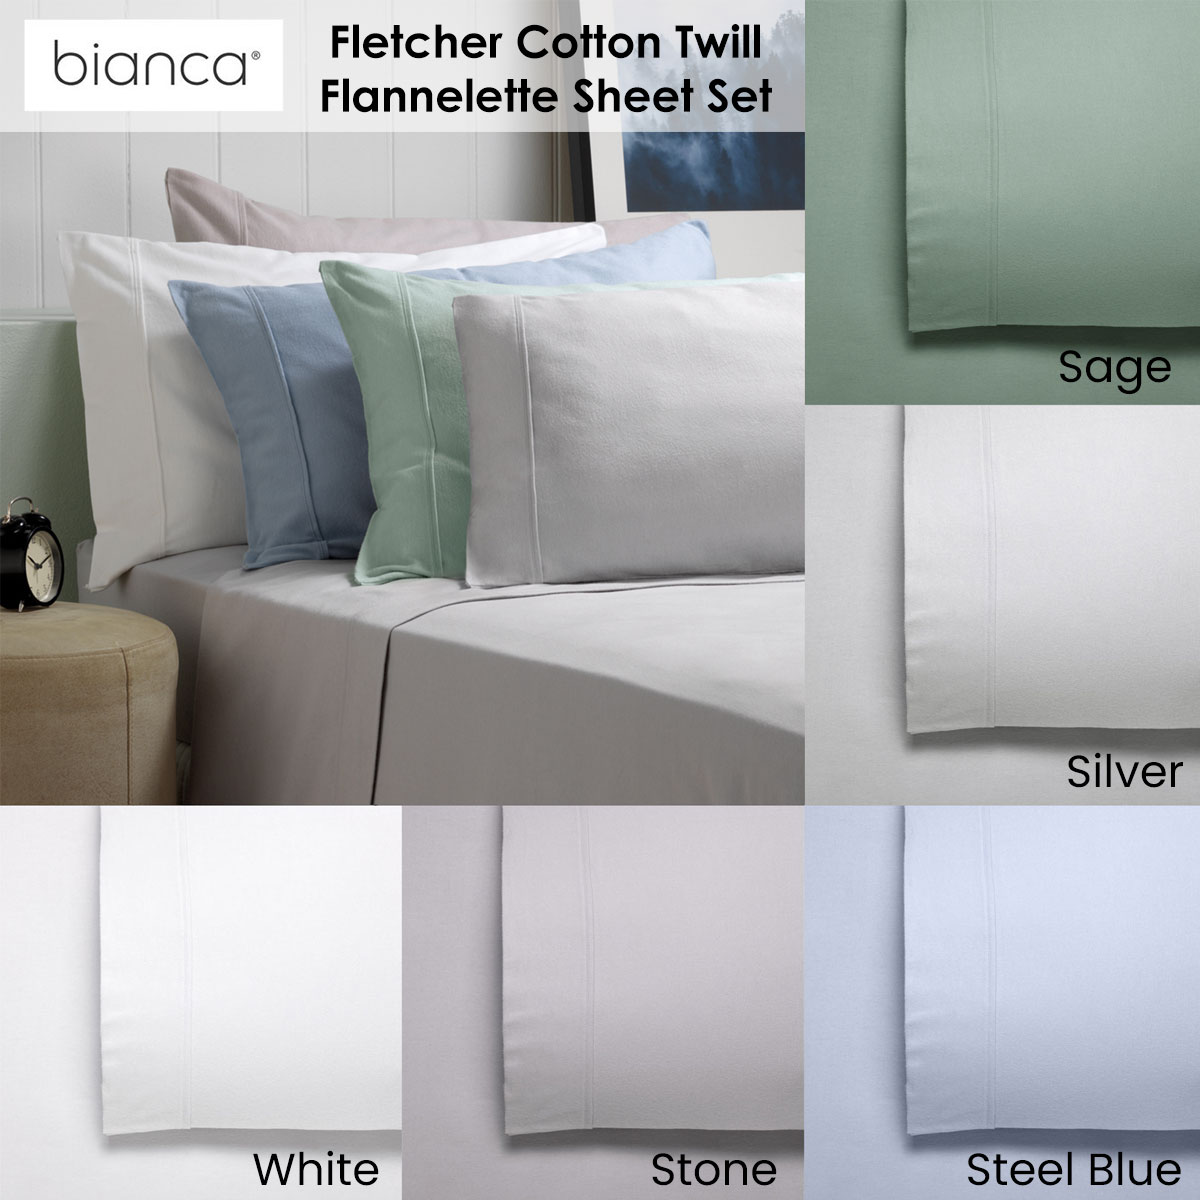 Fletcher Flannelette Cotton Winter Sheet Set 40cm Wall by Bianca - ALL SIZES